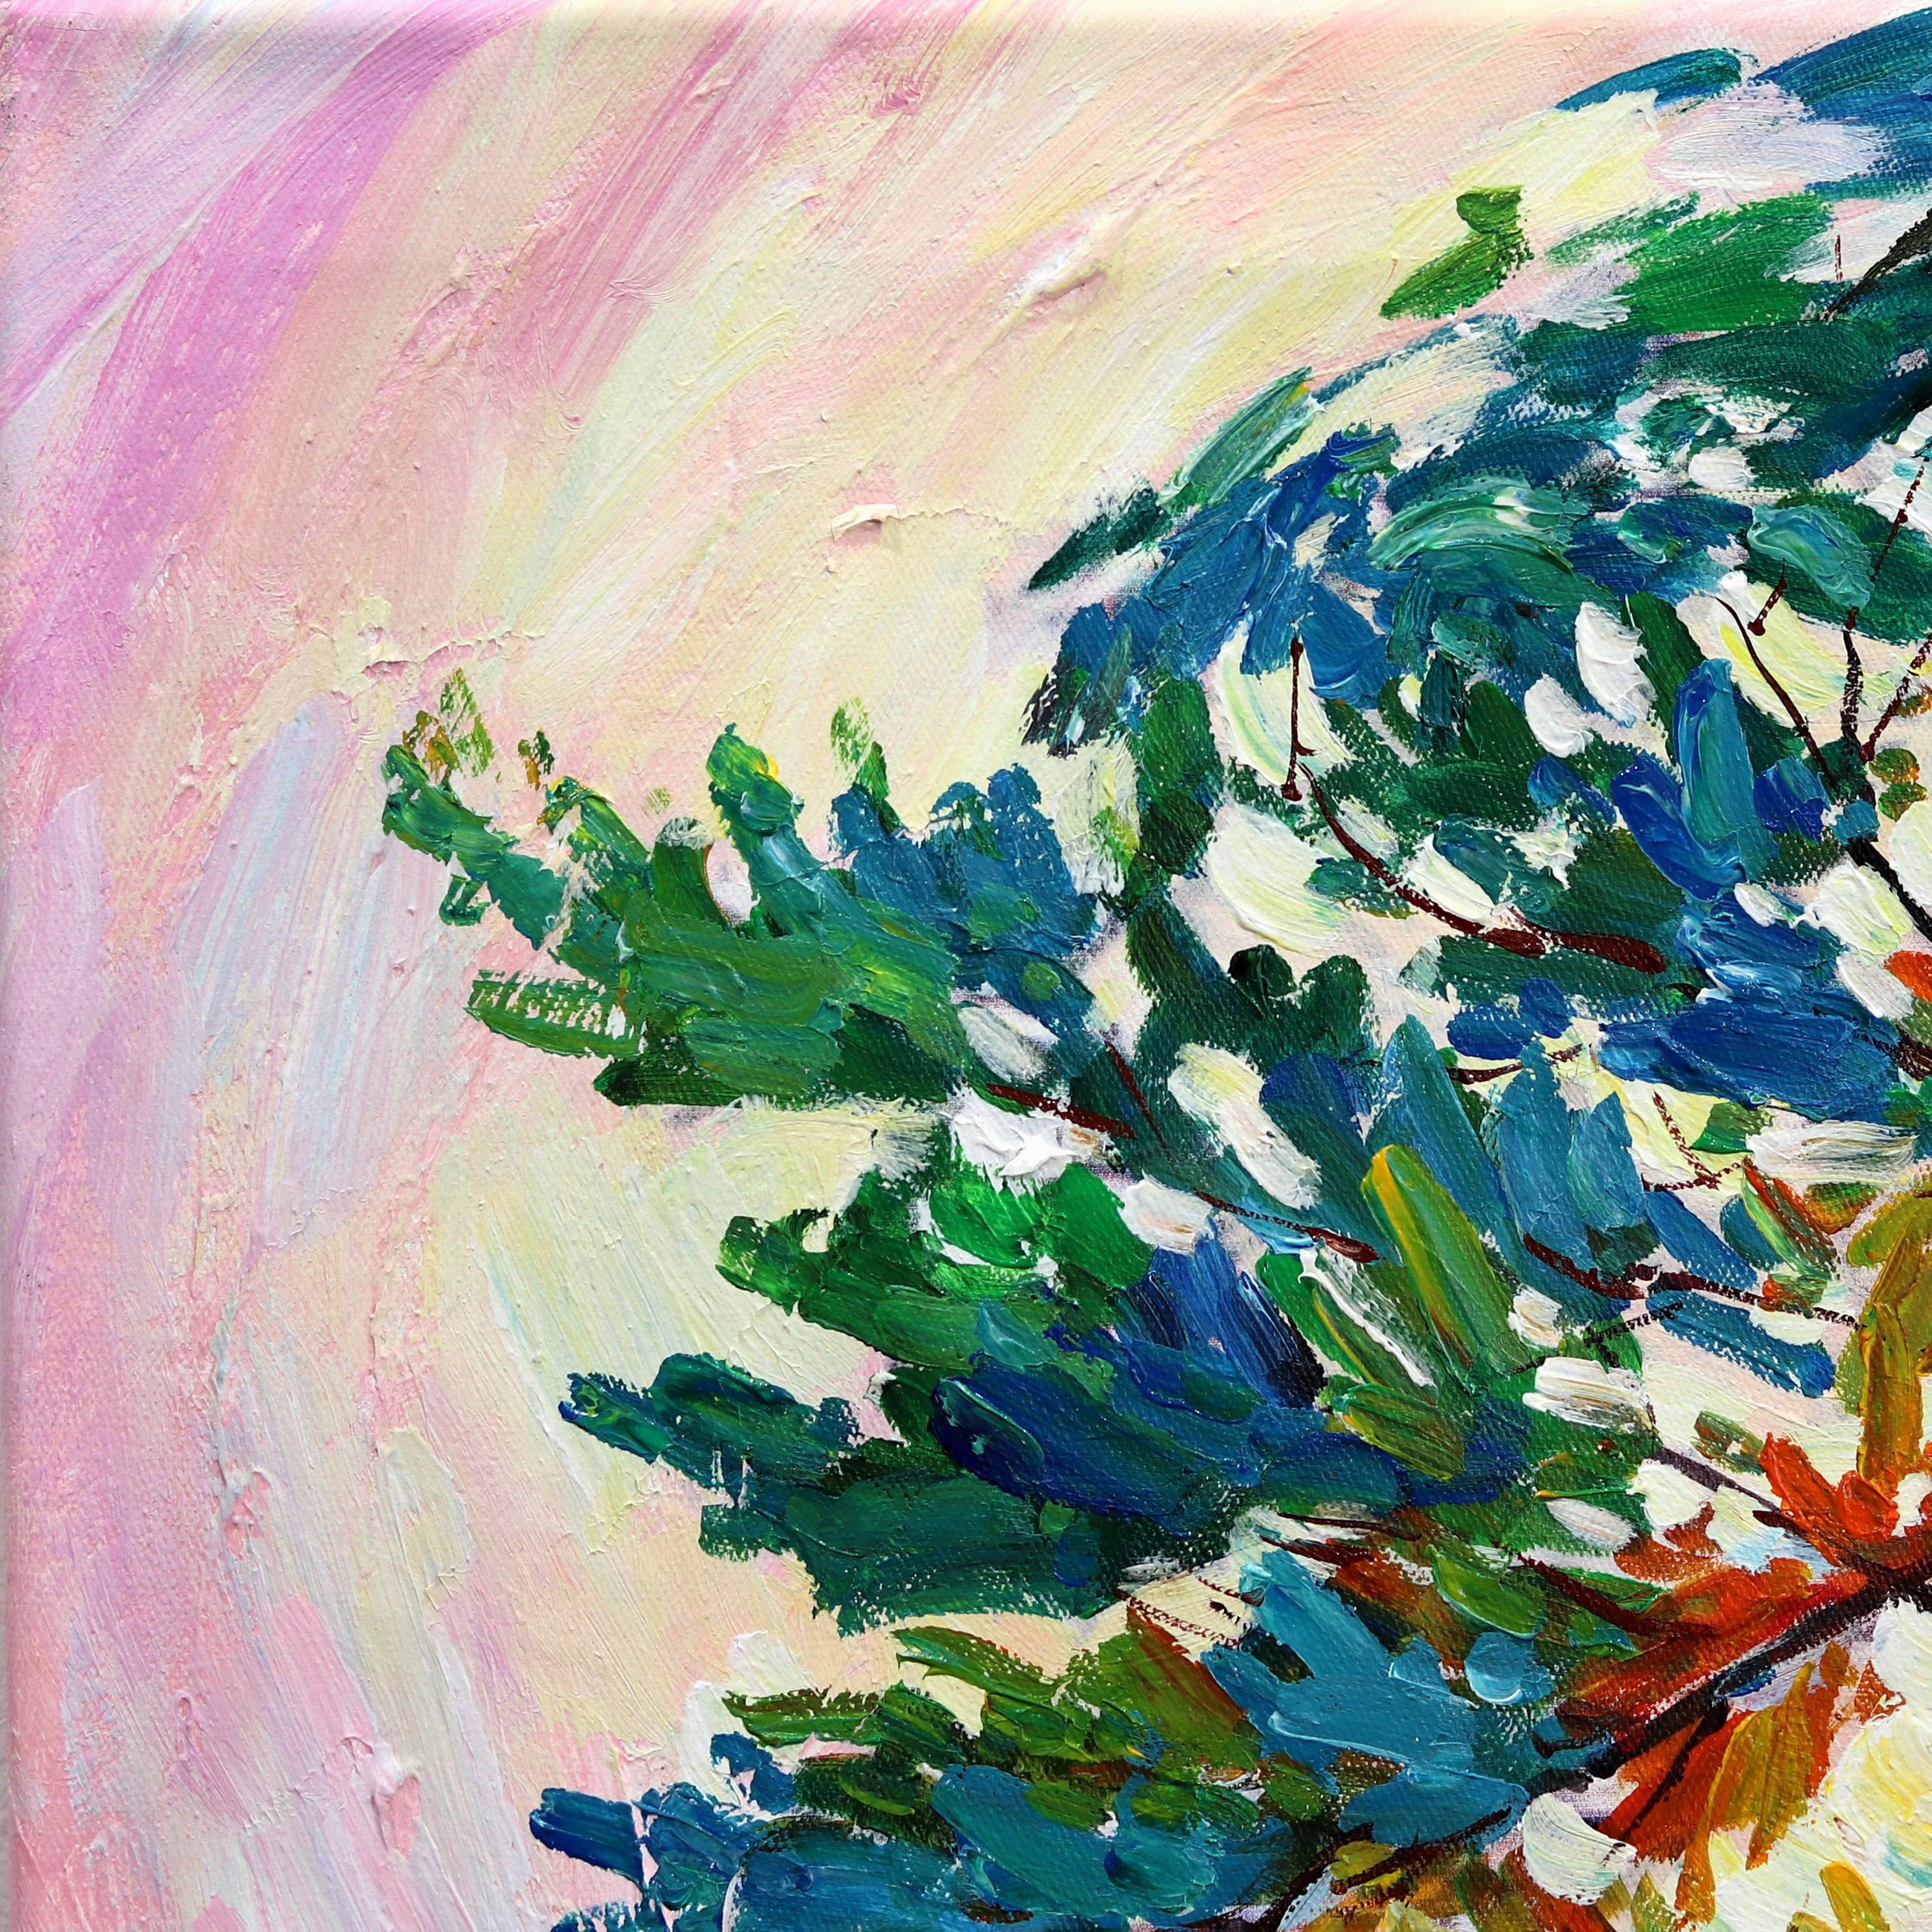 The Tree - Post-impressionnisme Painting par Katharina Husslein